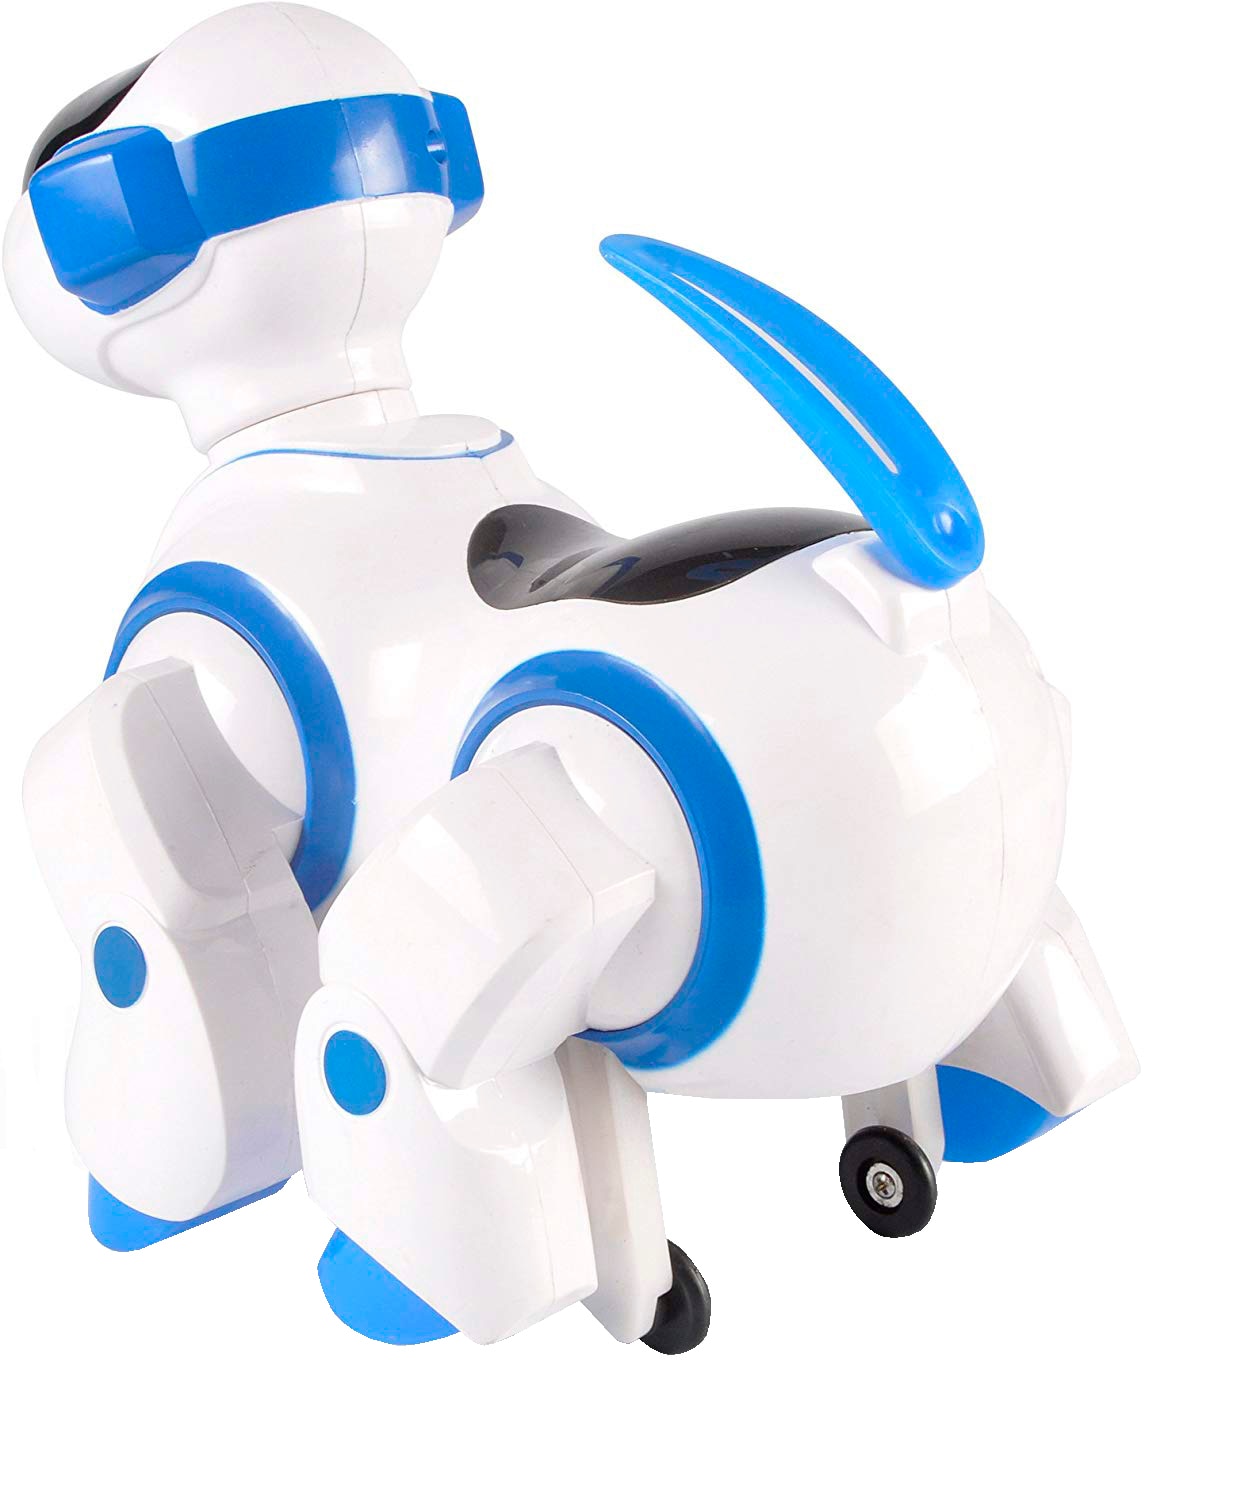 vivitar dancing robot dog